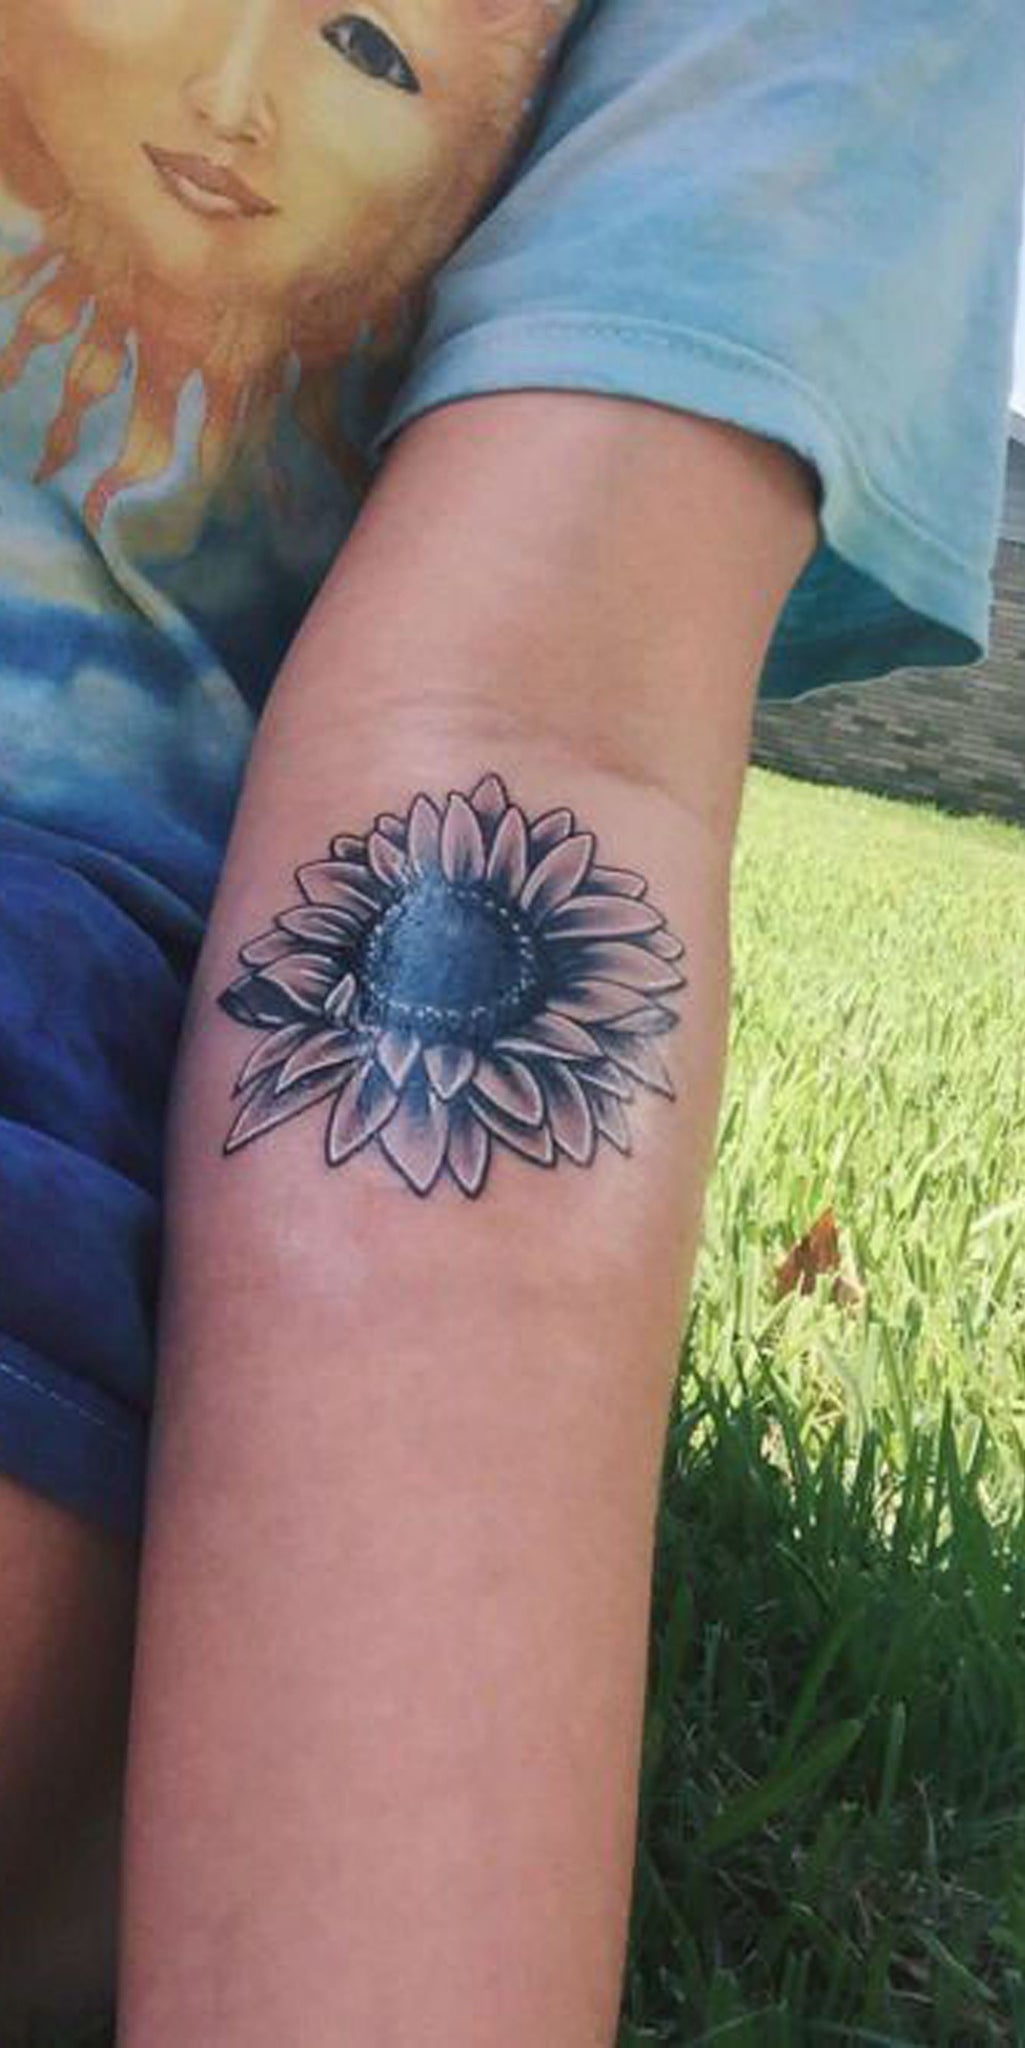 Cute Sunflower Forearm Tattoo Ideas for Women - Black and White Flower Arm Tat - www.MyBodiArt.com #tattoos